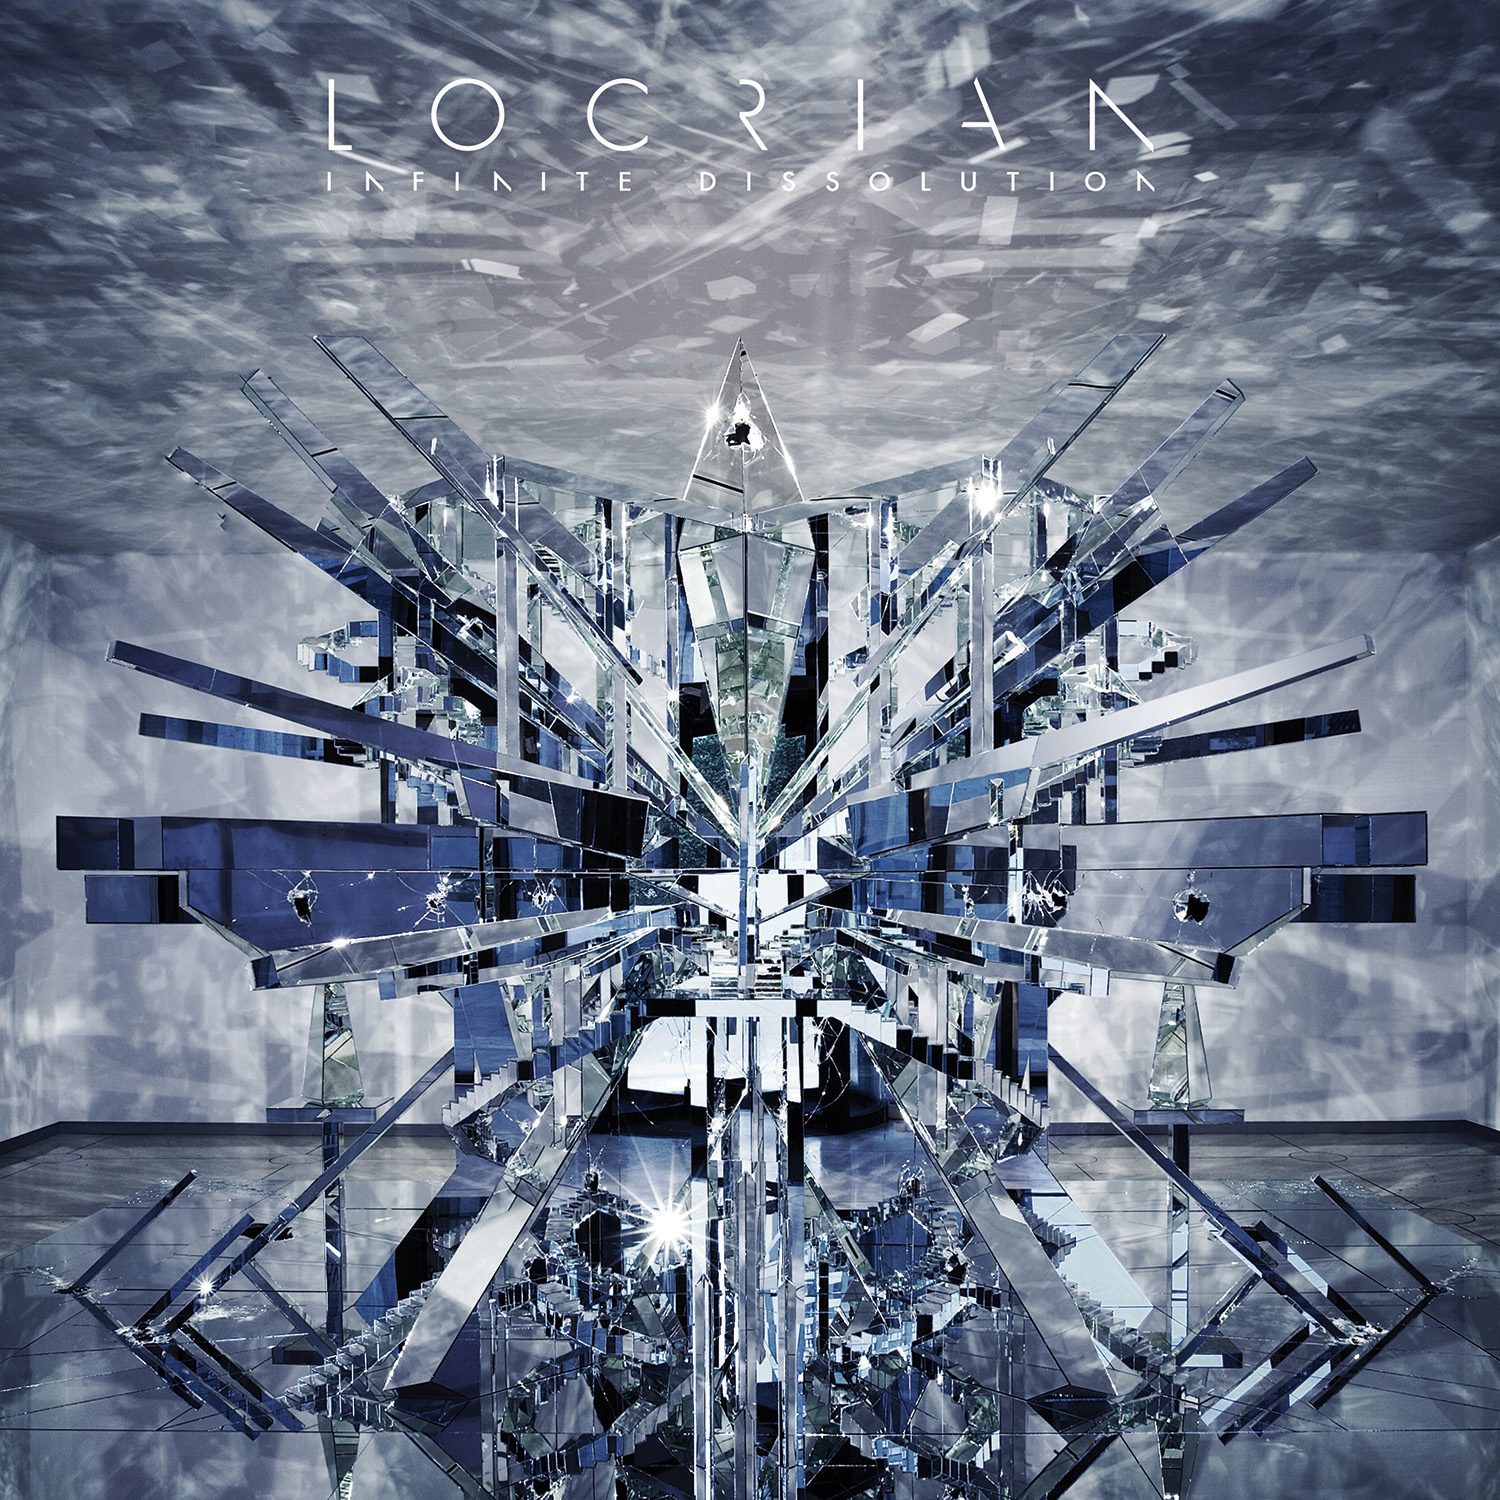 Locrian – Infinite Dissolution Review